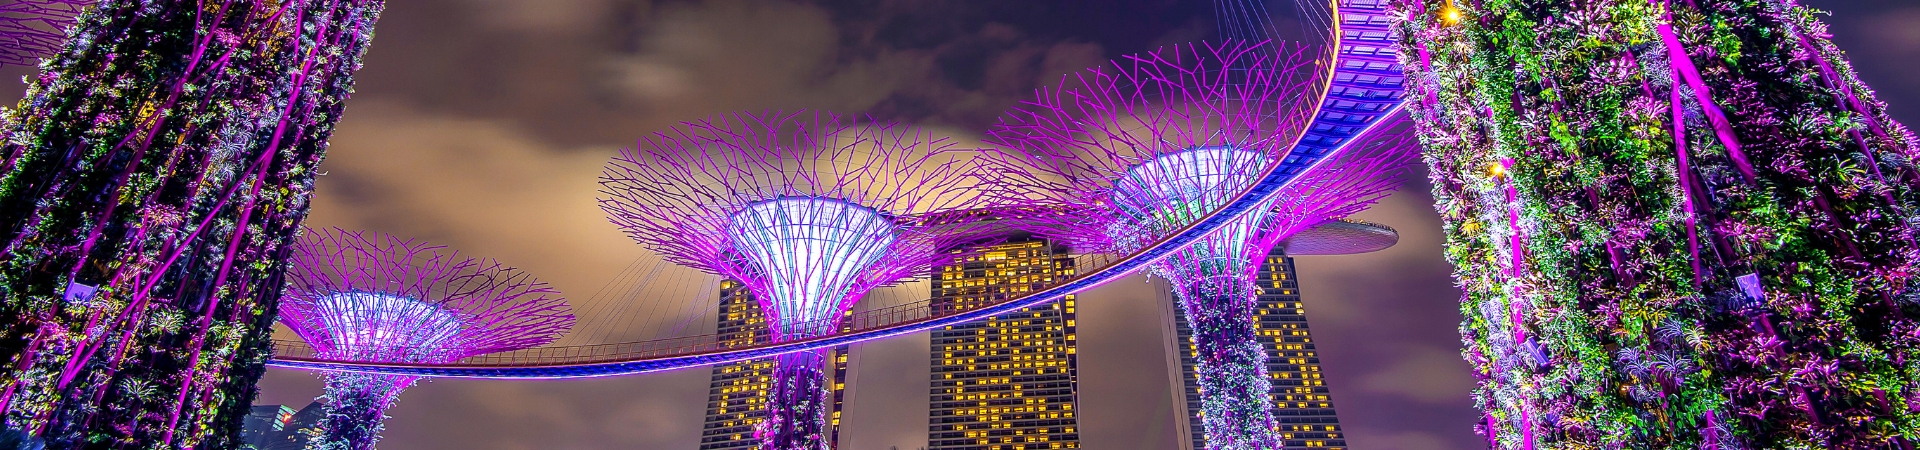 Image of Futuristic Gardens of Singapore